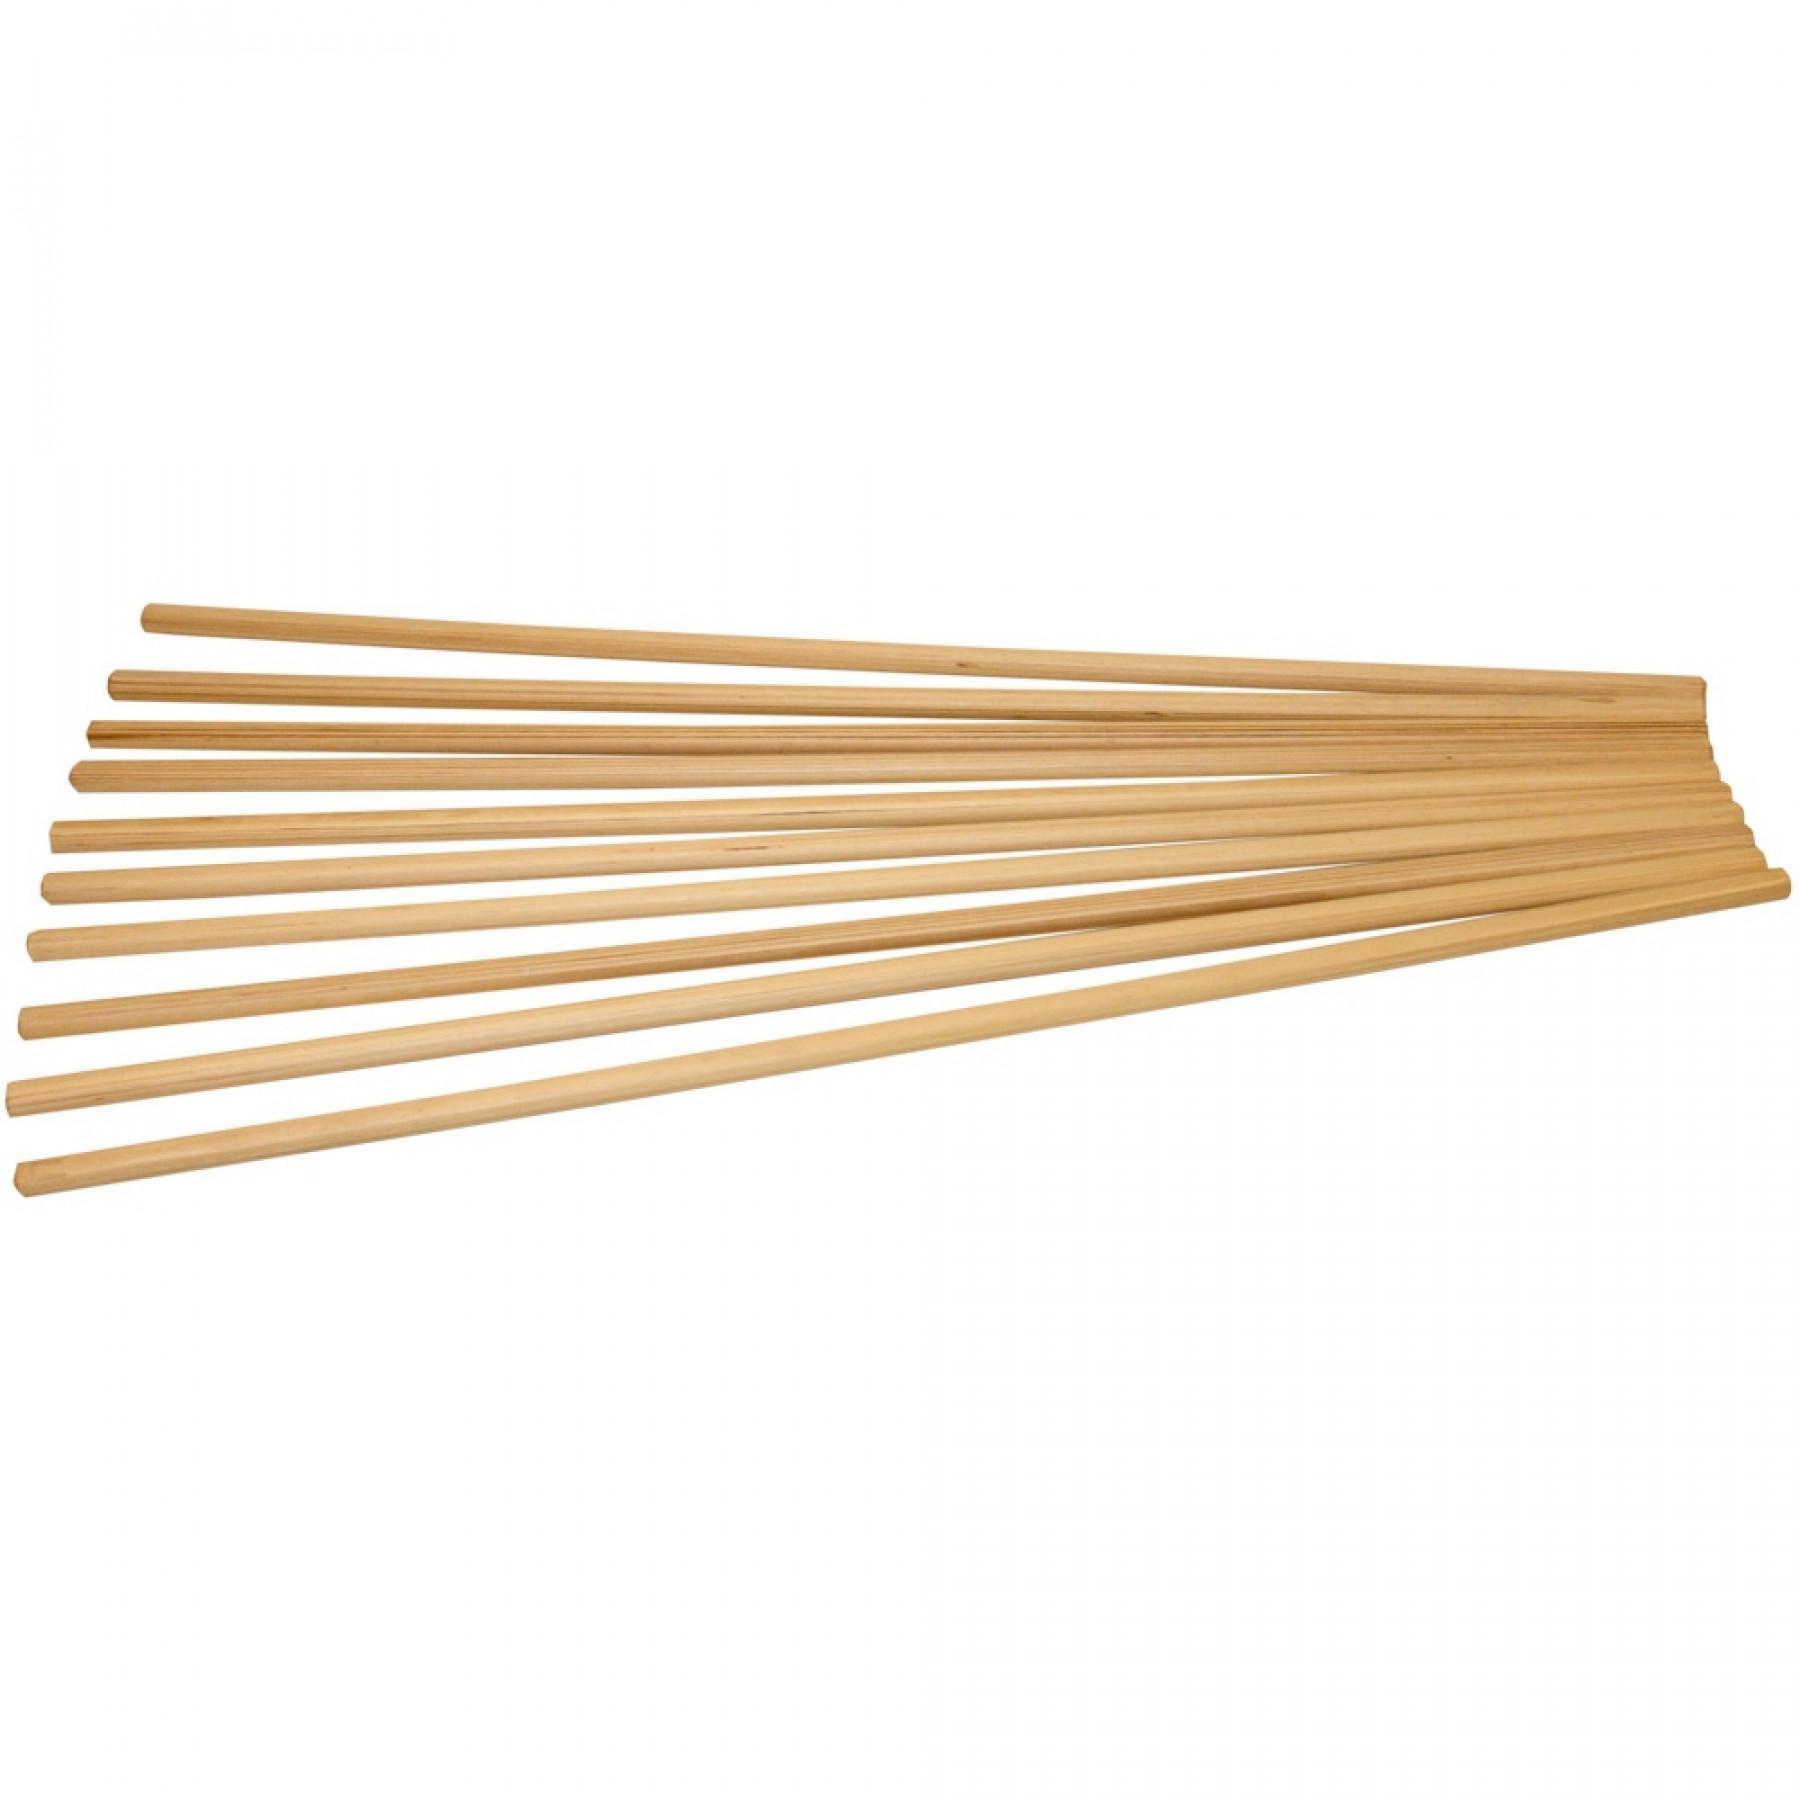 Wooden sticks Leader Fit 140cm (x10)